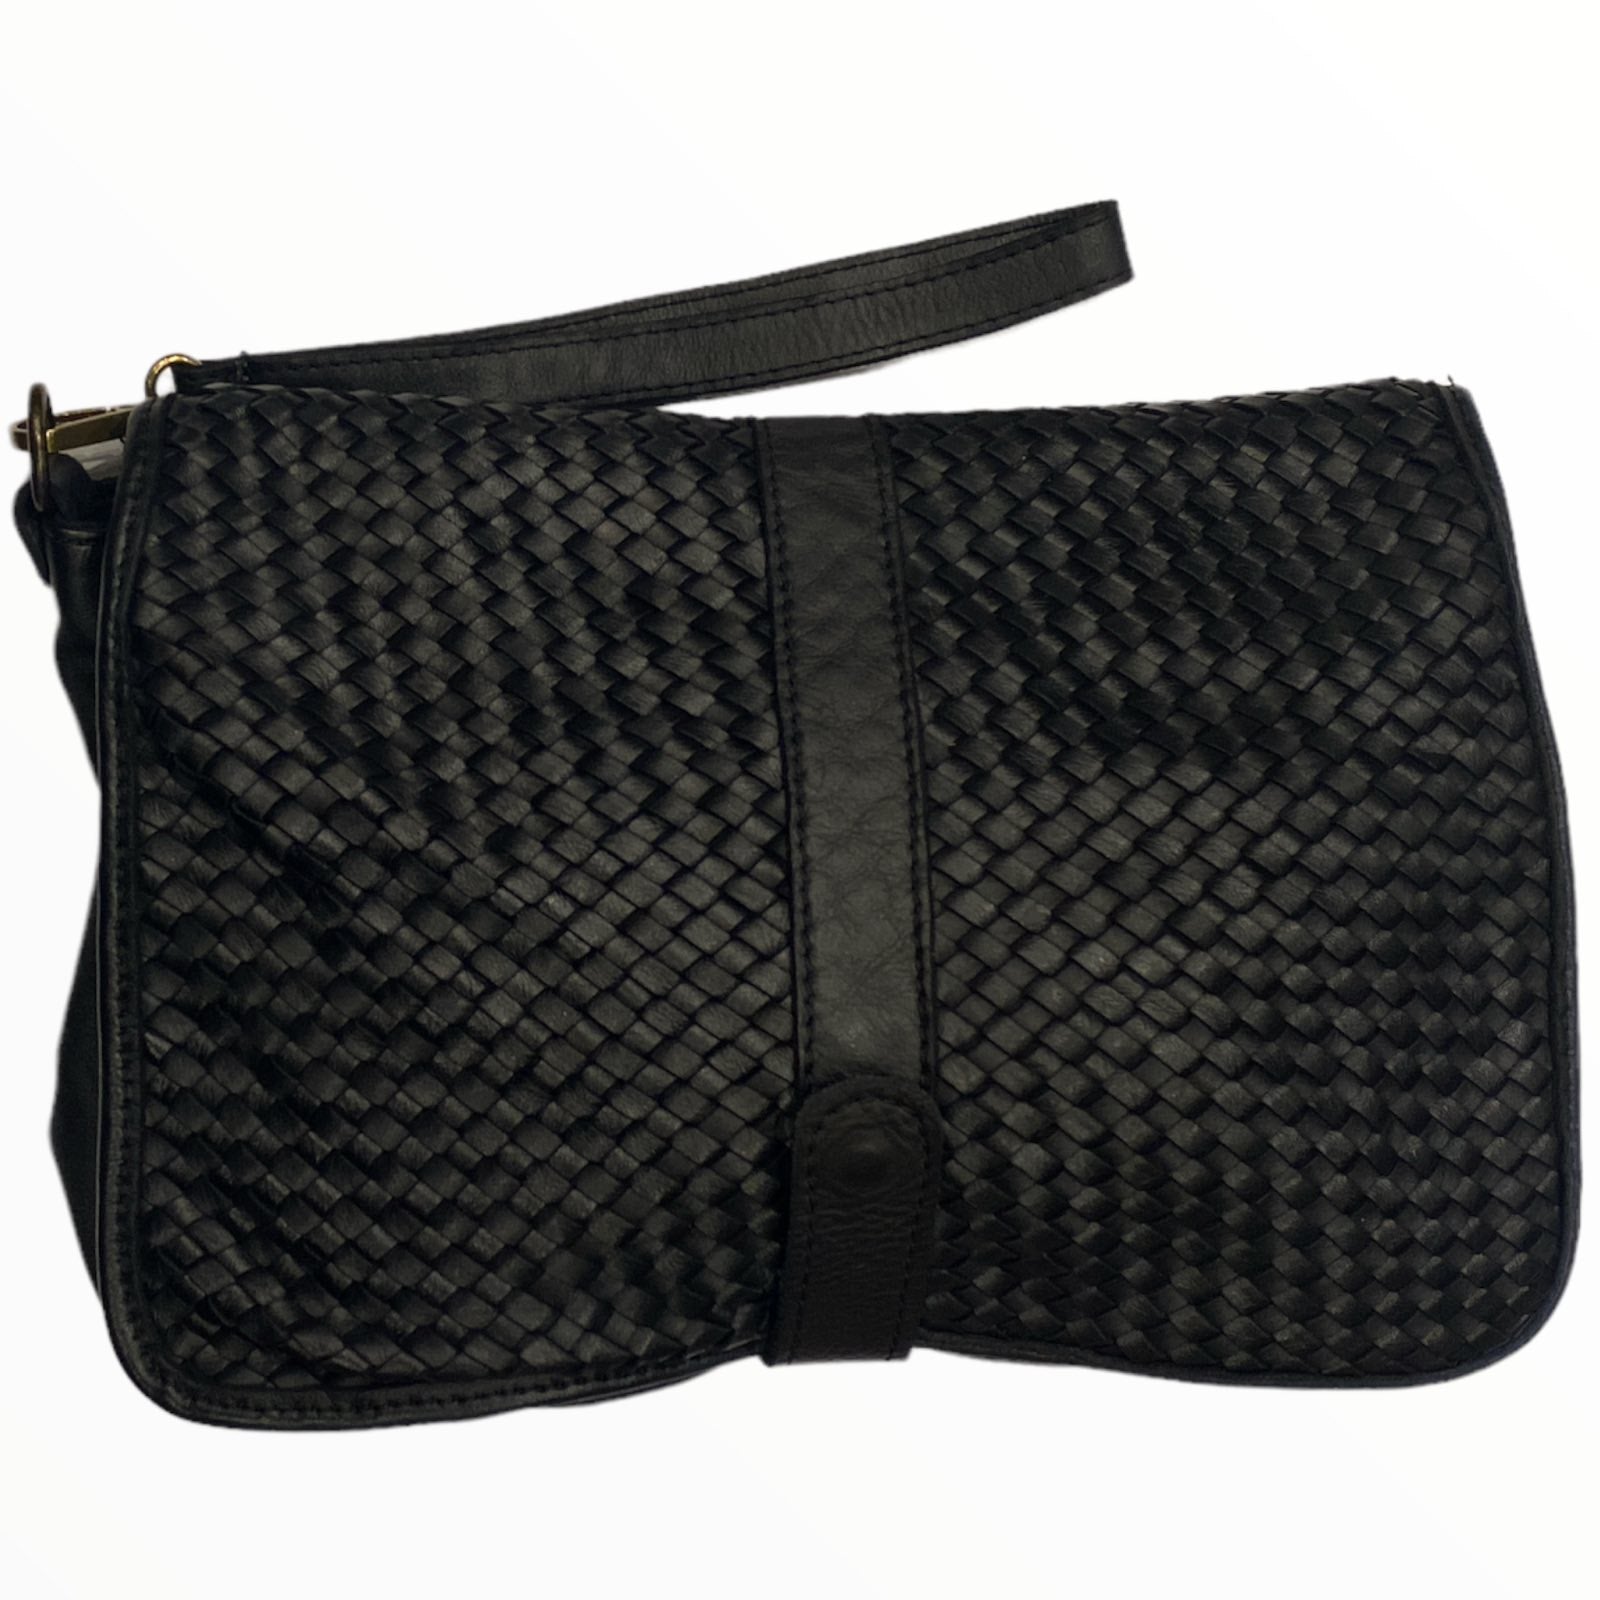 Black chic handwoven leather messenger bag